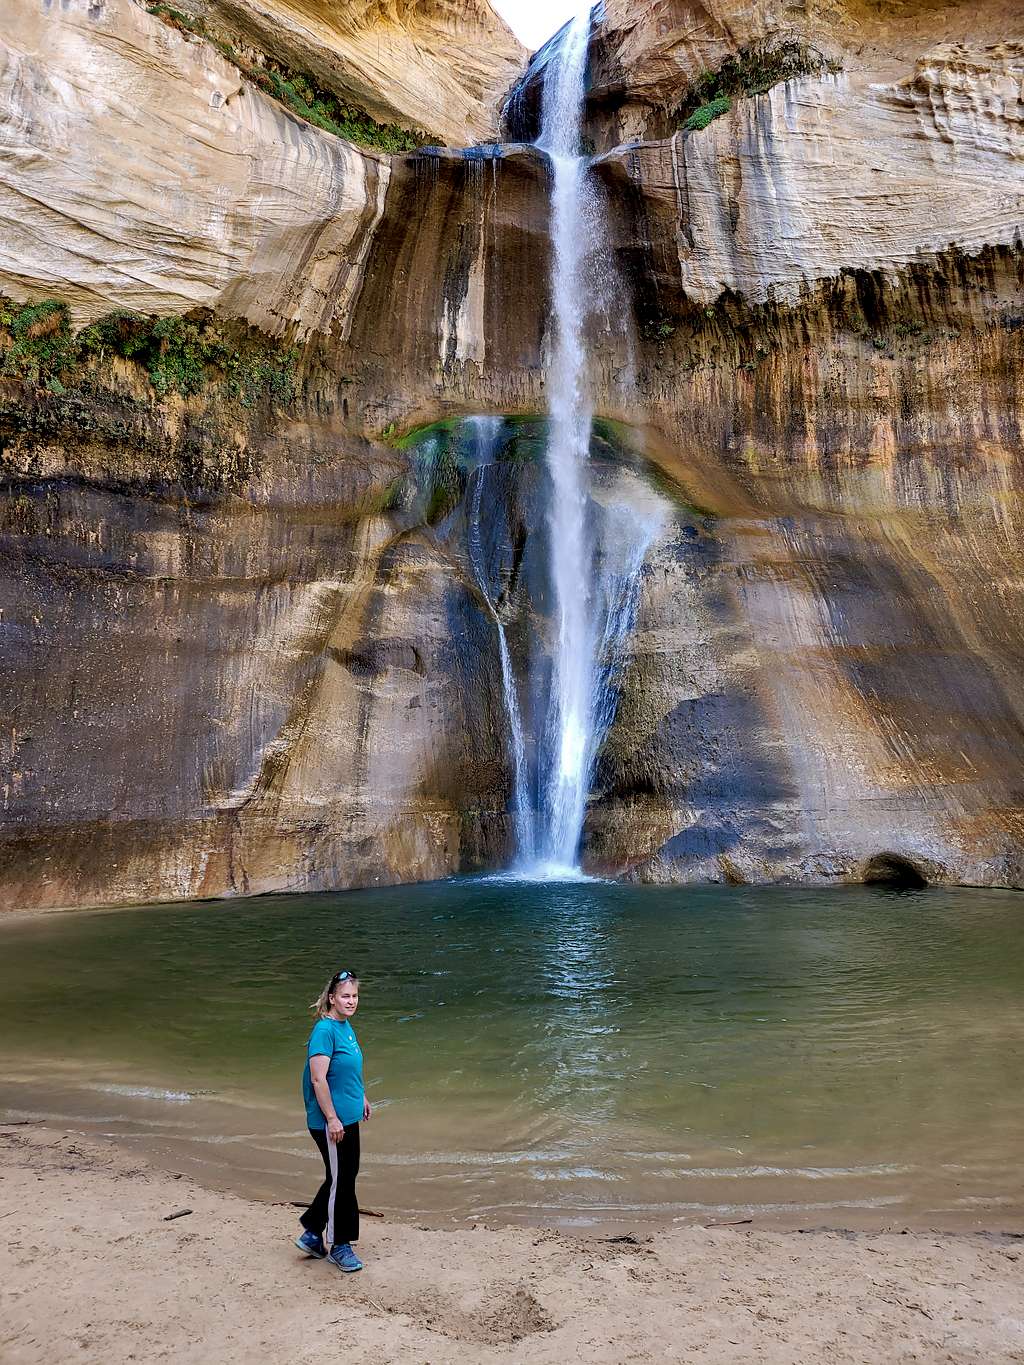 Kimberly at Lower Calf Creek Falls